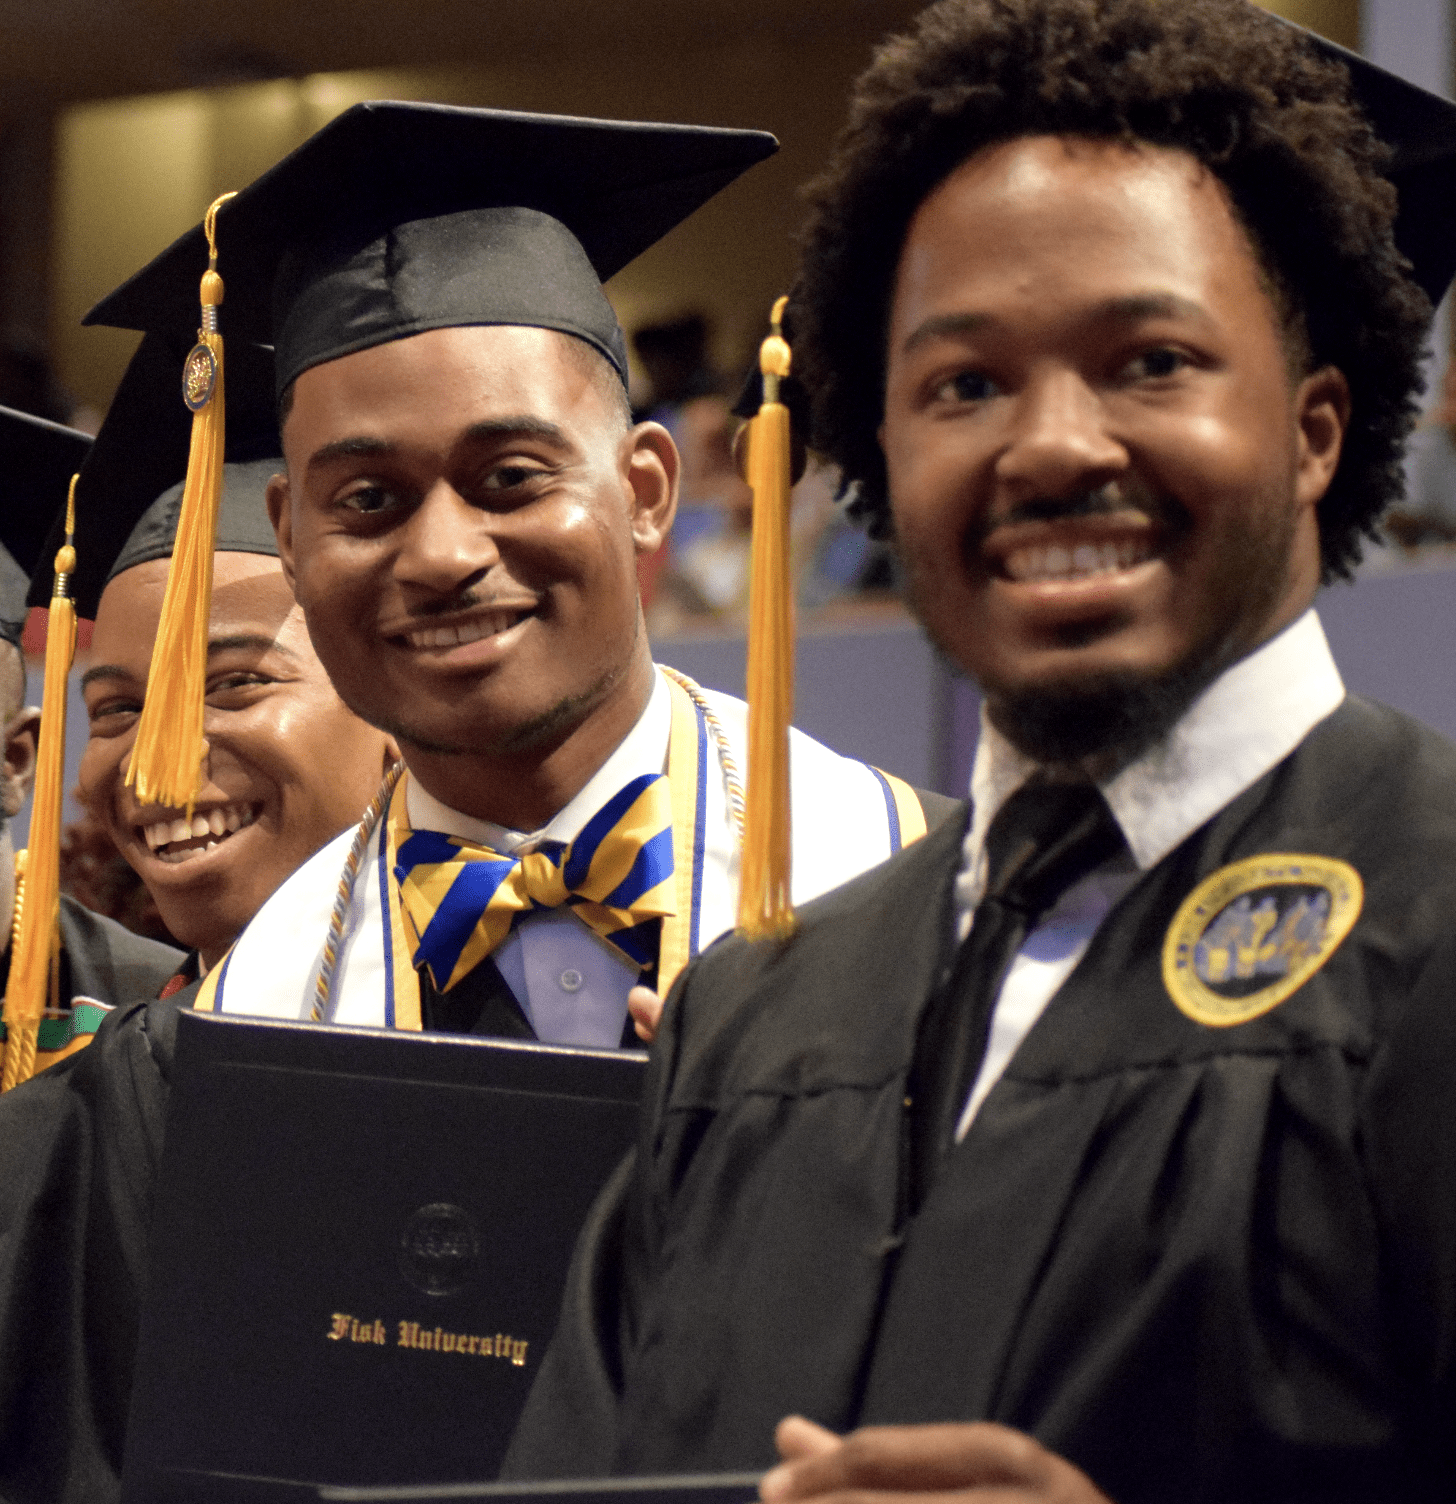 Fisk University Launches 4Year Graduation Pledge with Bonus Master’s